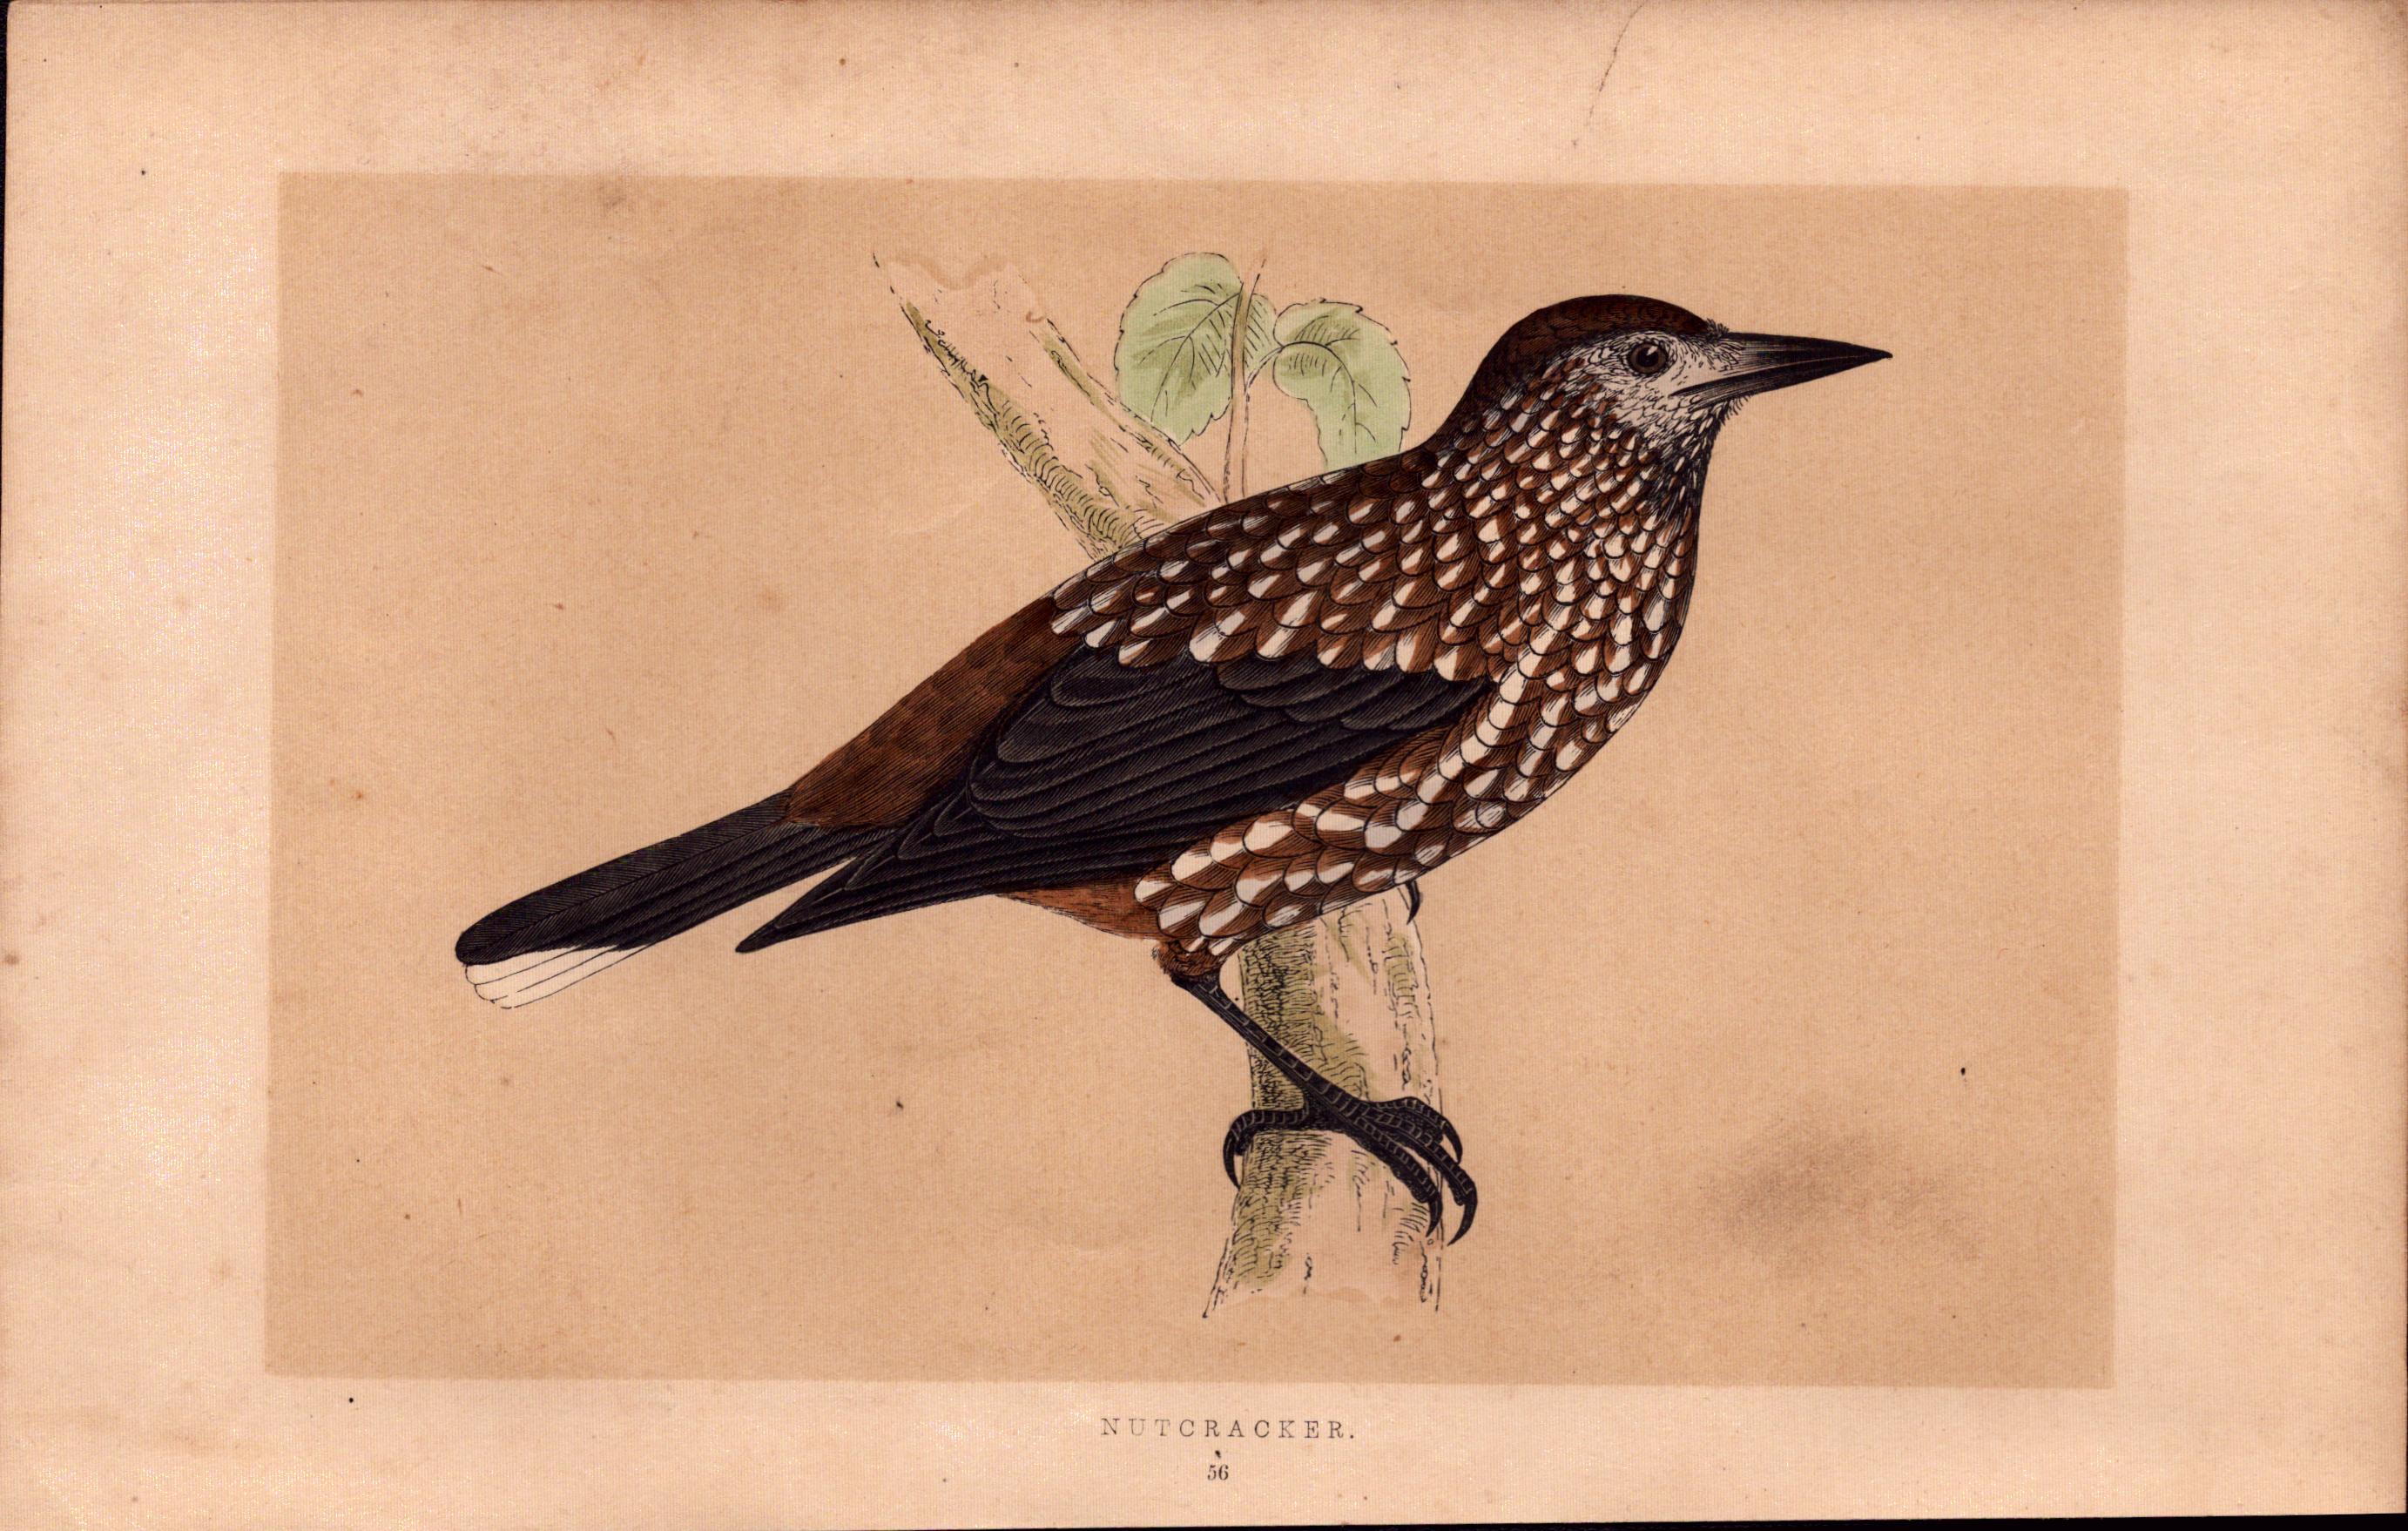 Nutcracker Rev Morris Antique History of British Birds Engraving.